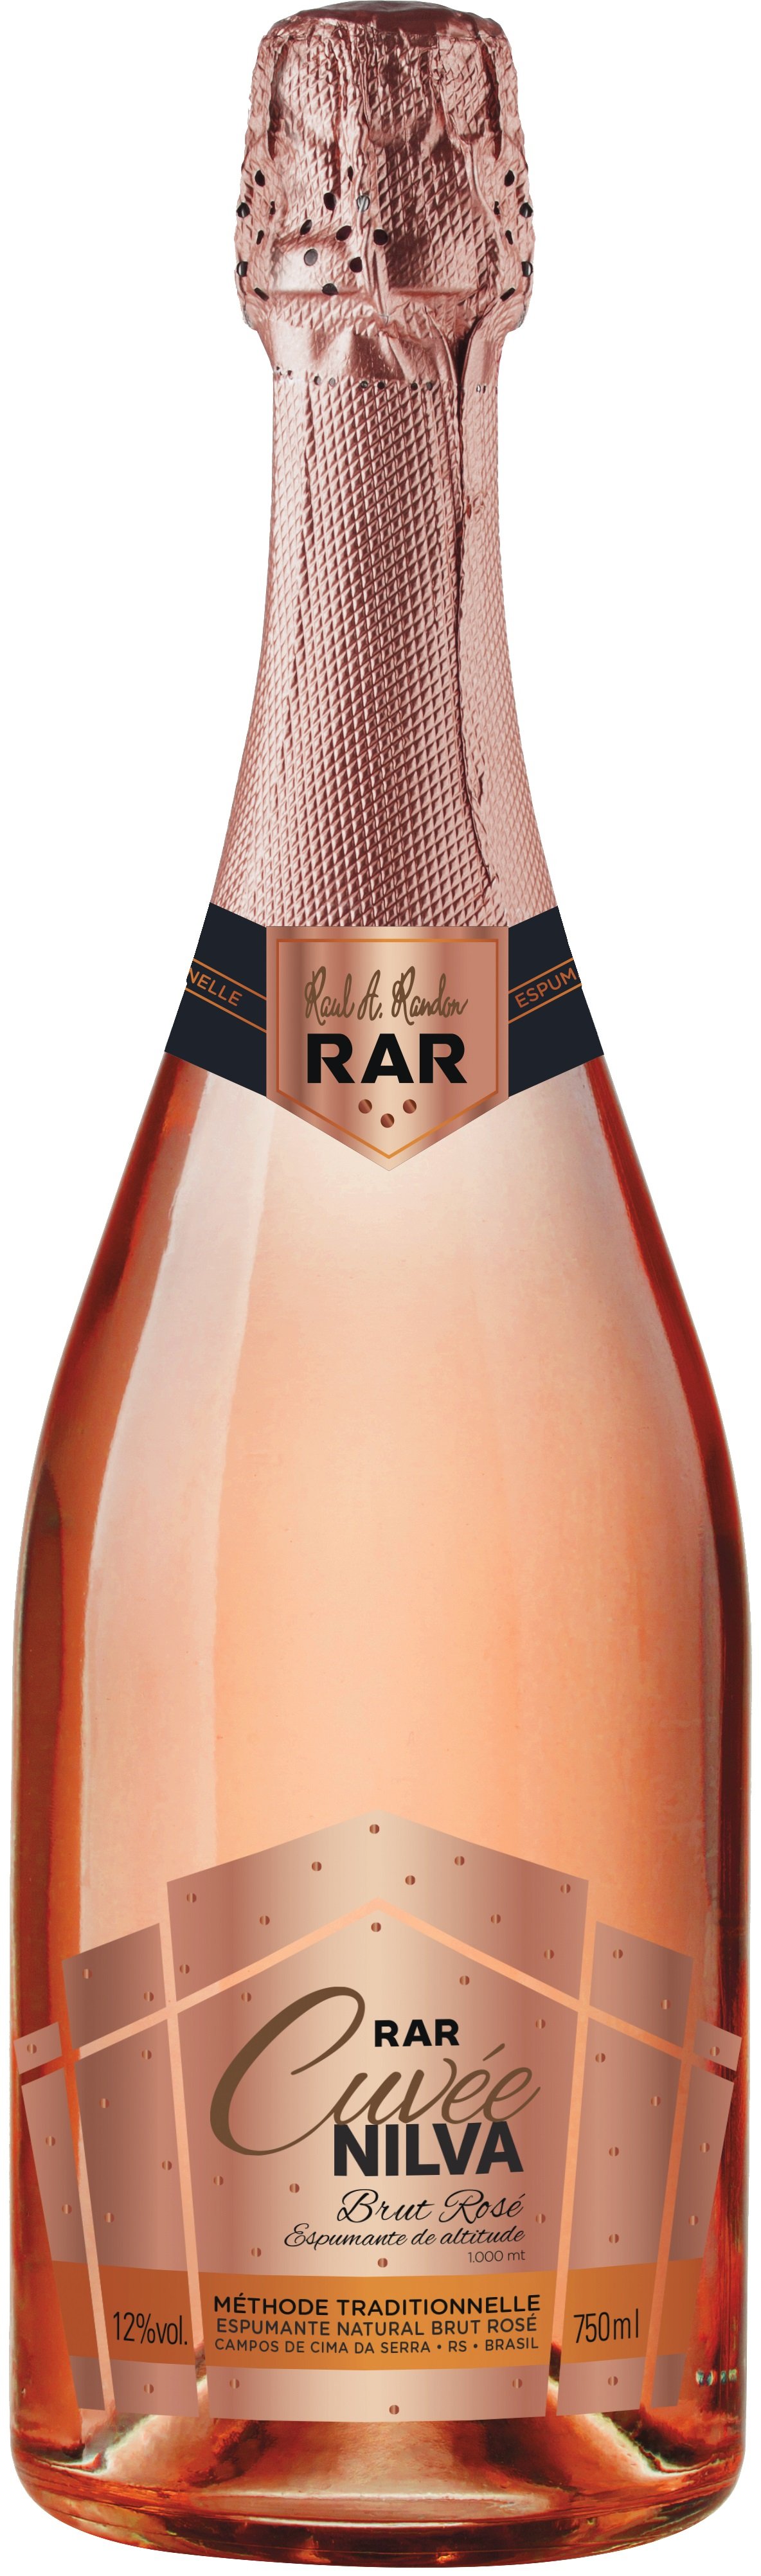 Espumante RaR Cuvée Nilva Rosé ml Verace Brut 750 | Vino